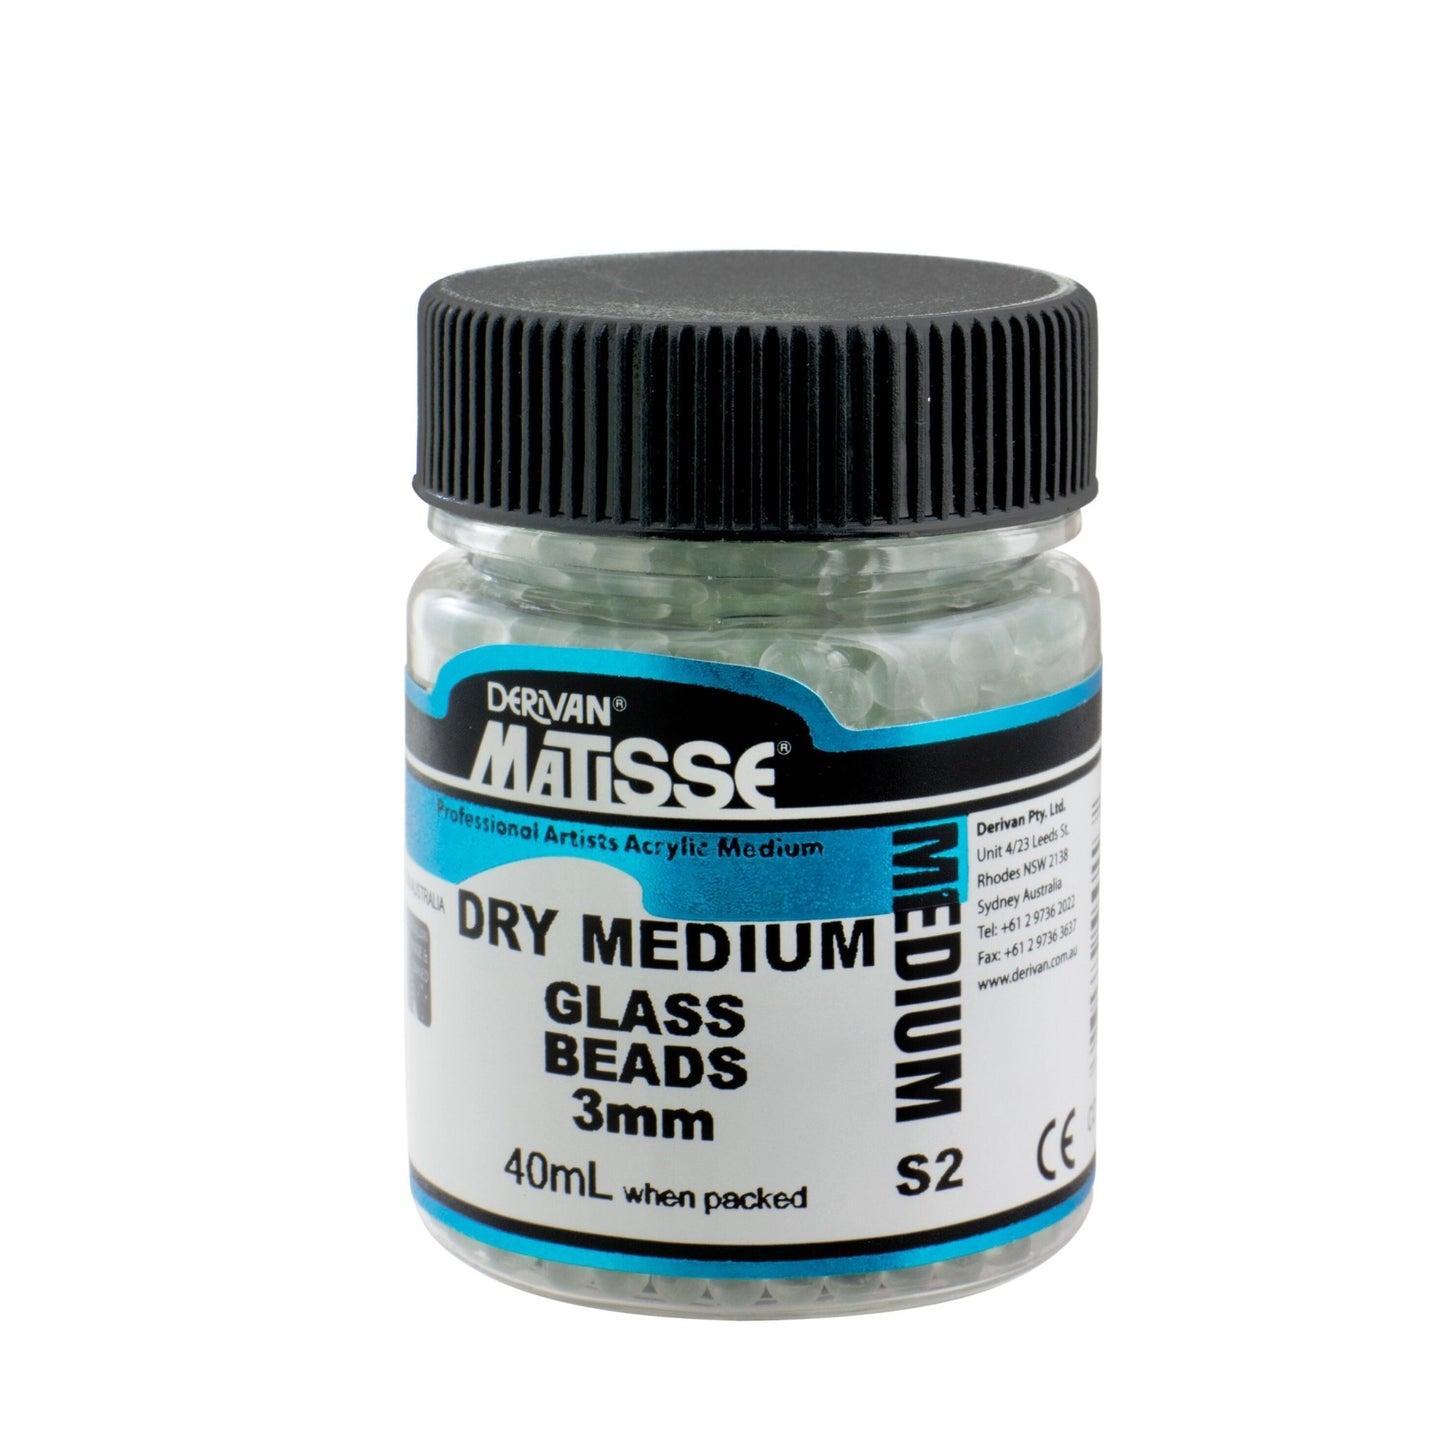 Matisse Dry Medium 40ml Glass Beads 3mm - theartshop.com.au